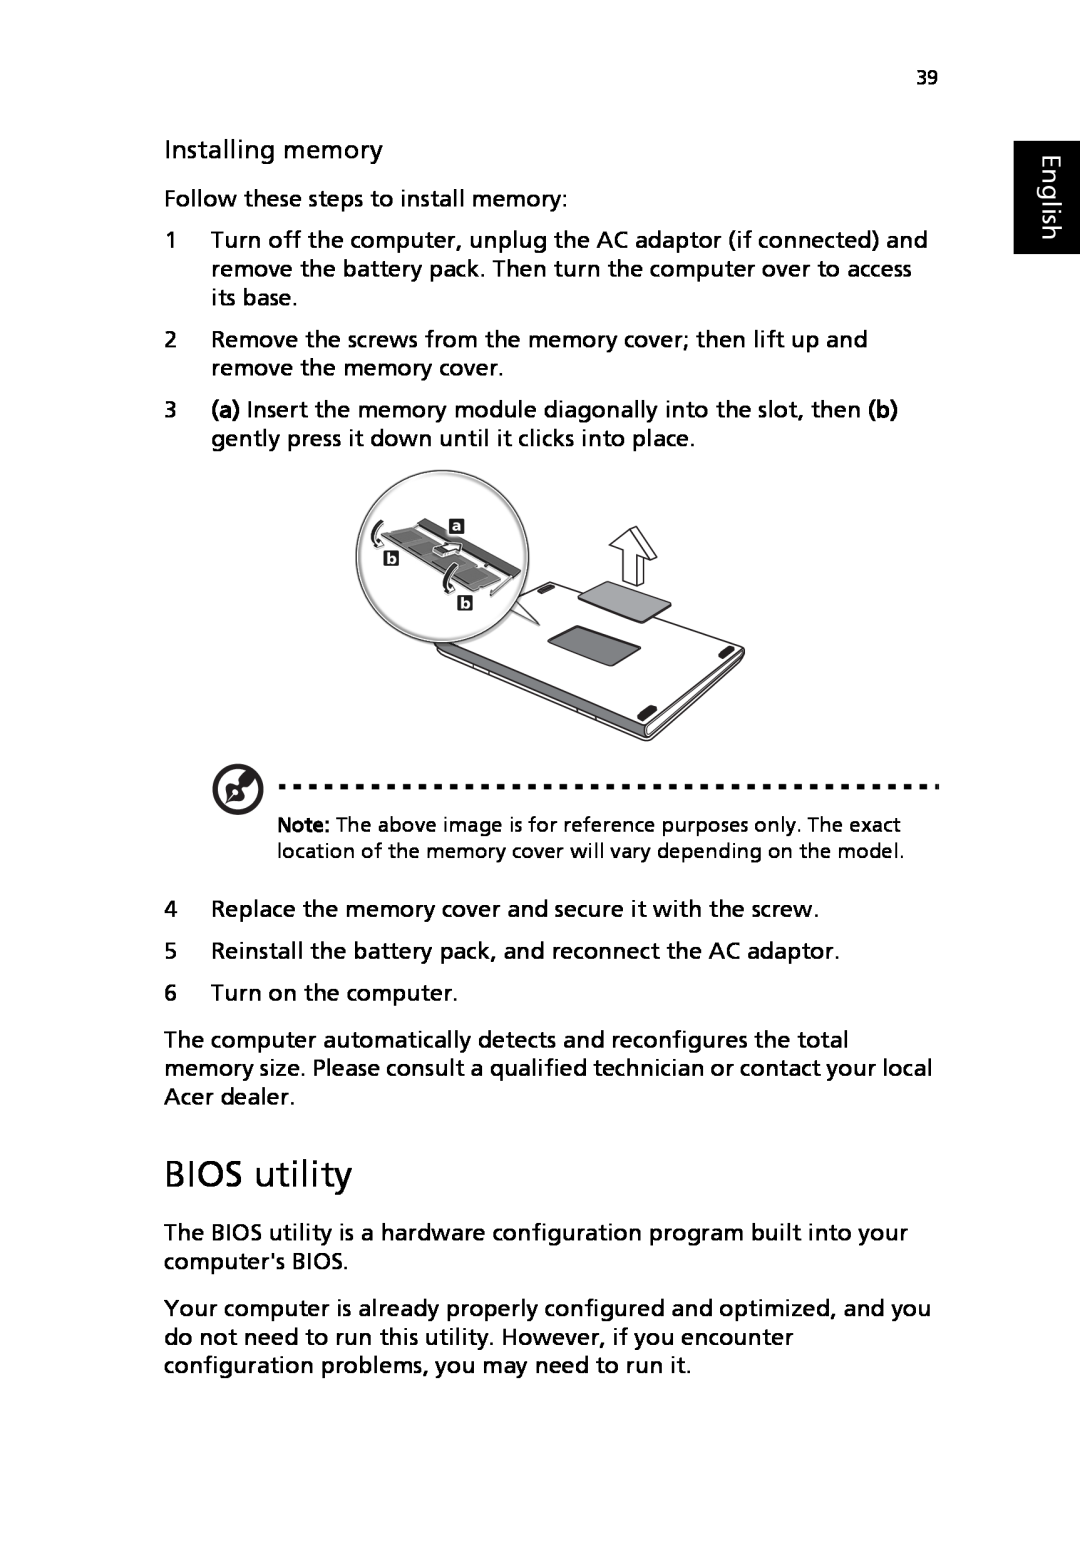 Acer 2310 Series manual BIOS utility, Installing memory, English 